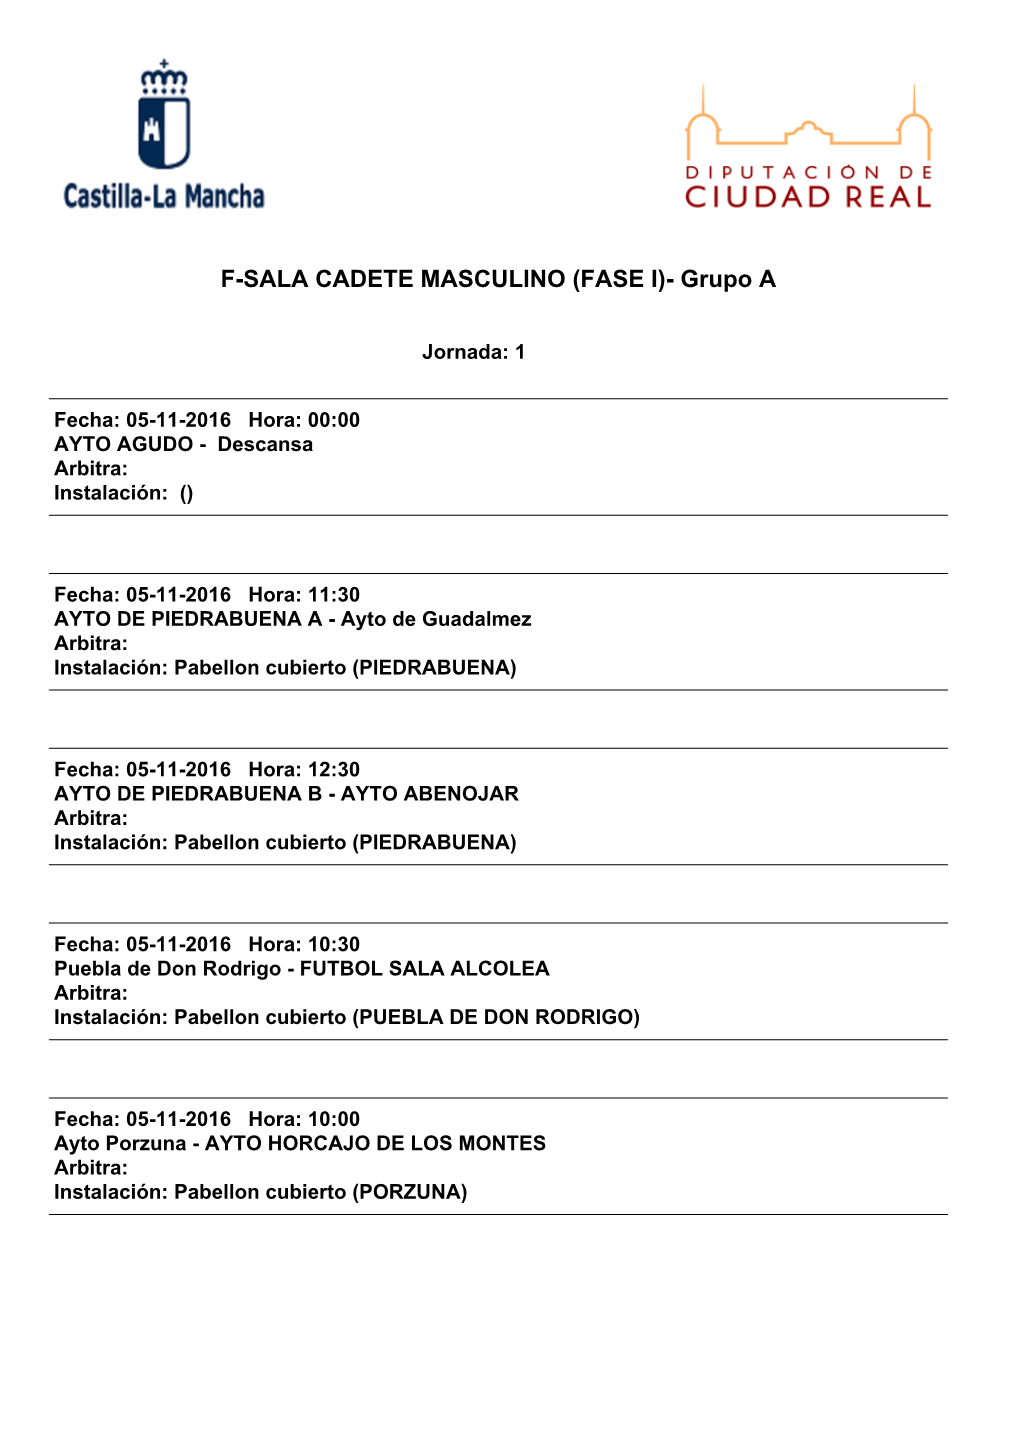 F-SALA CADETE MASCULINO (FASE I)- Grupo A